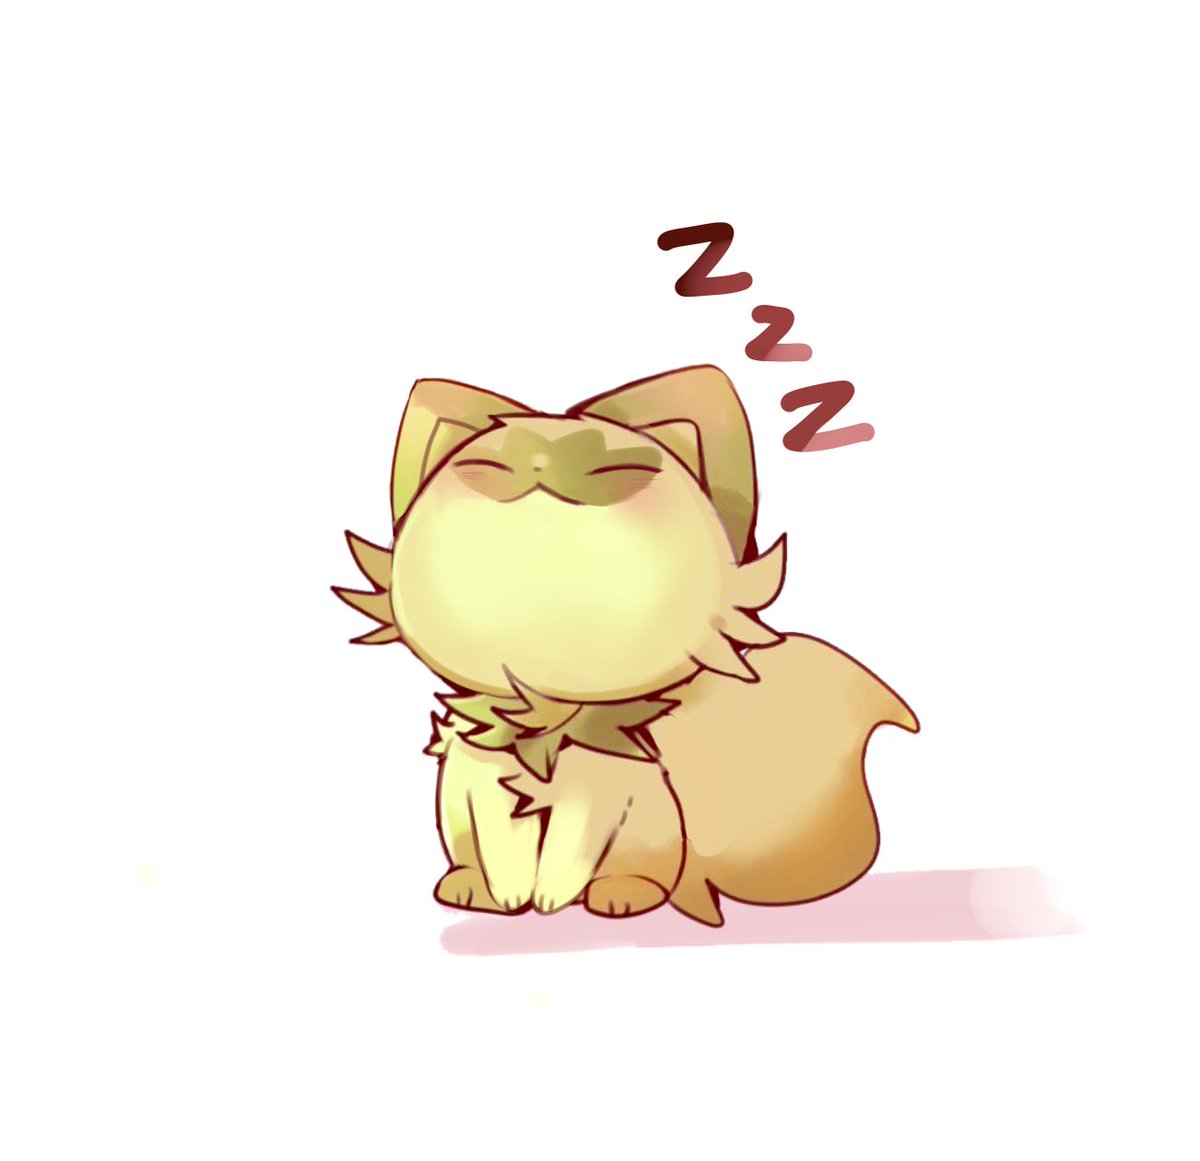 no humans pokemon (creature) zzz solo closed eyes sleeping white background  illustration images